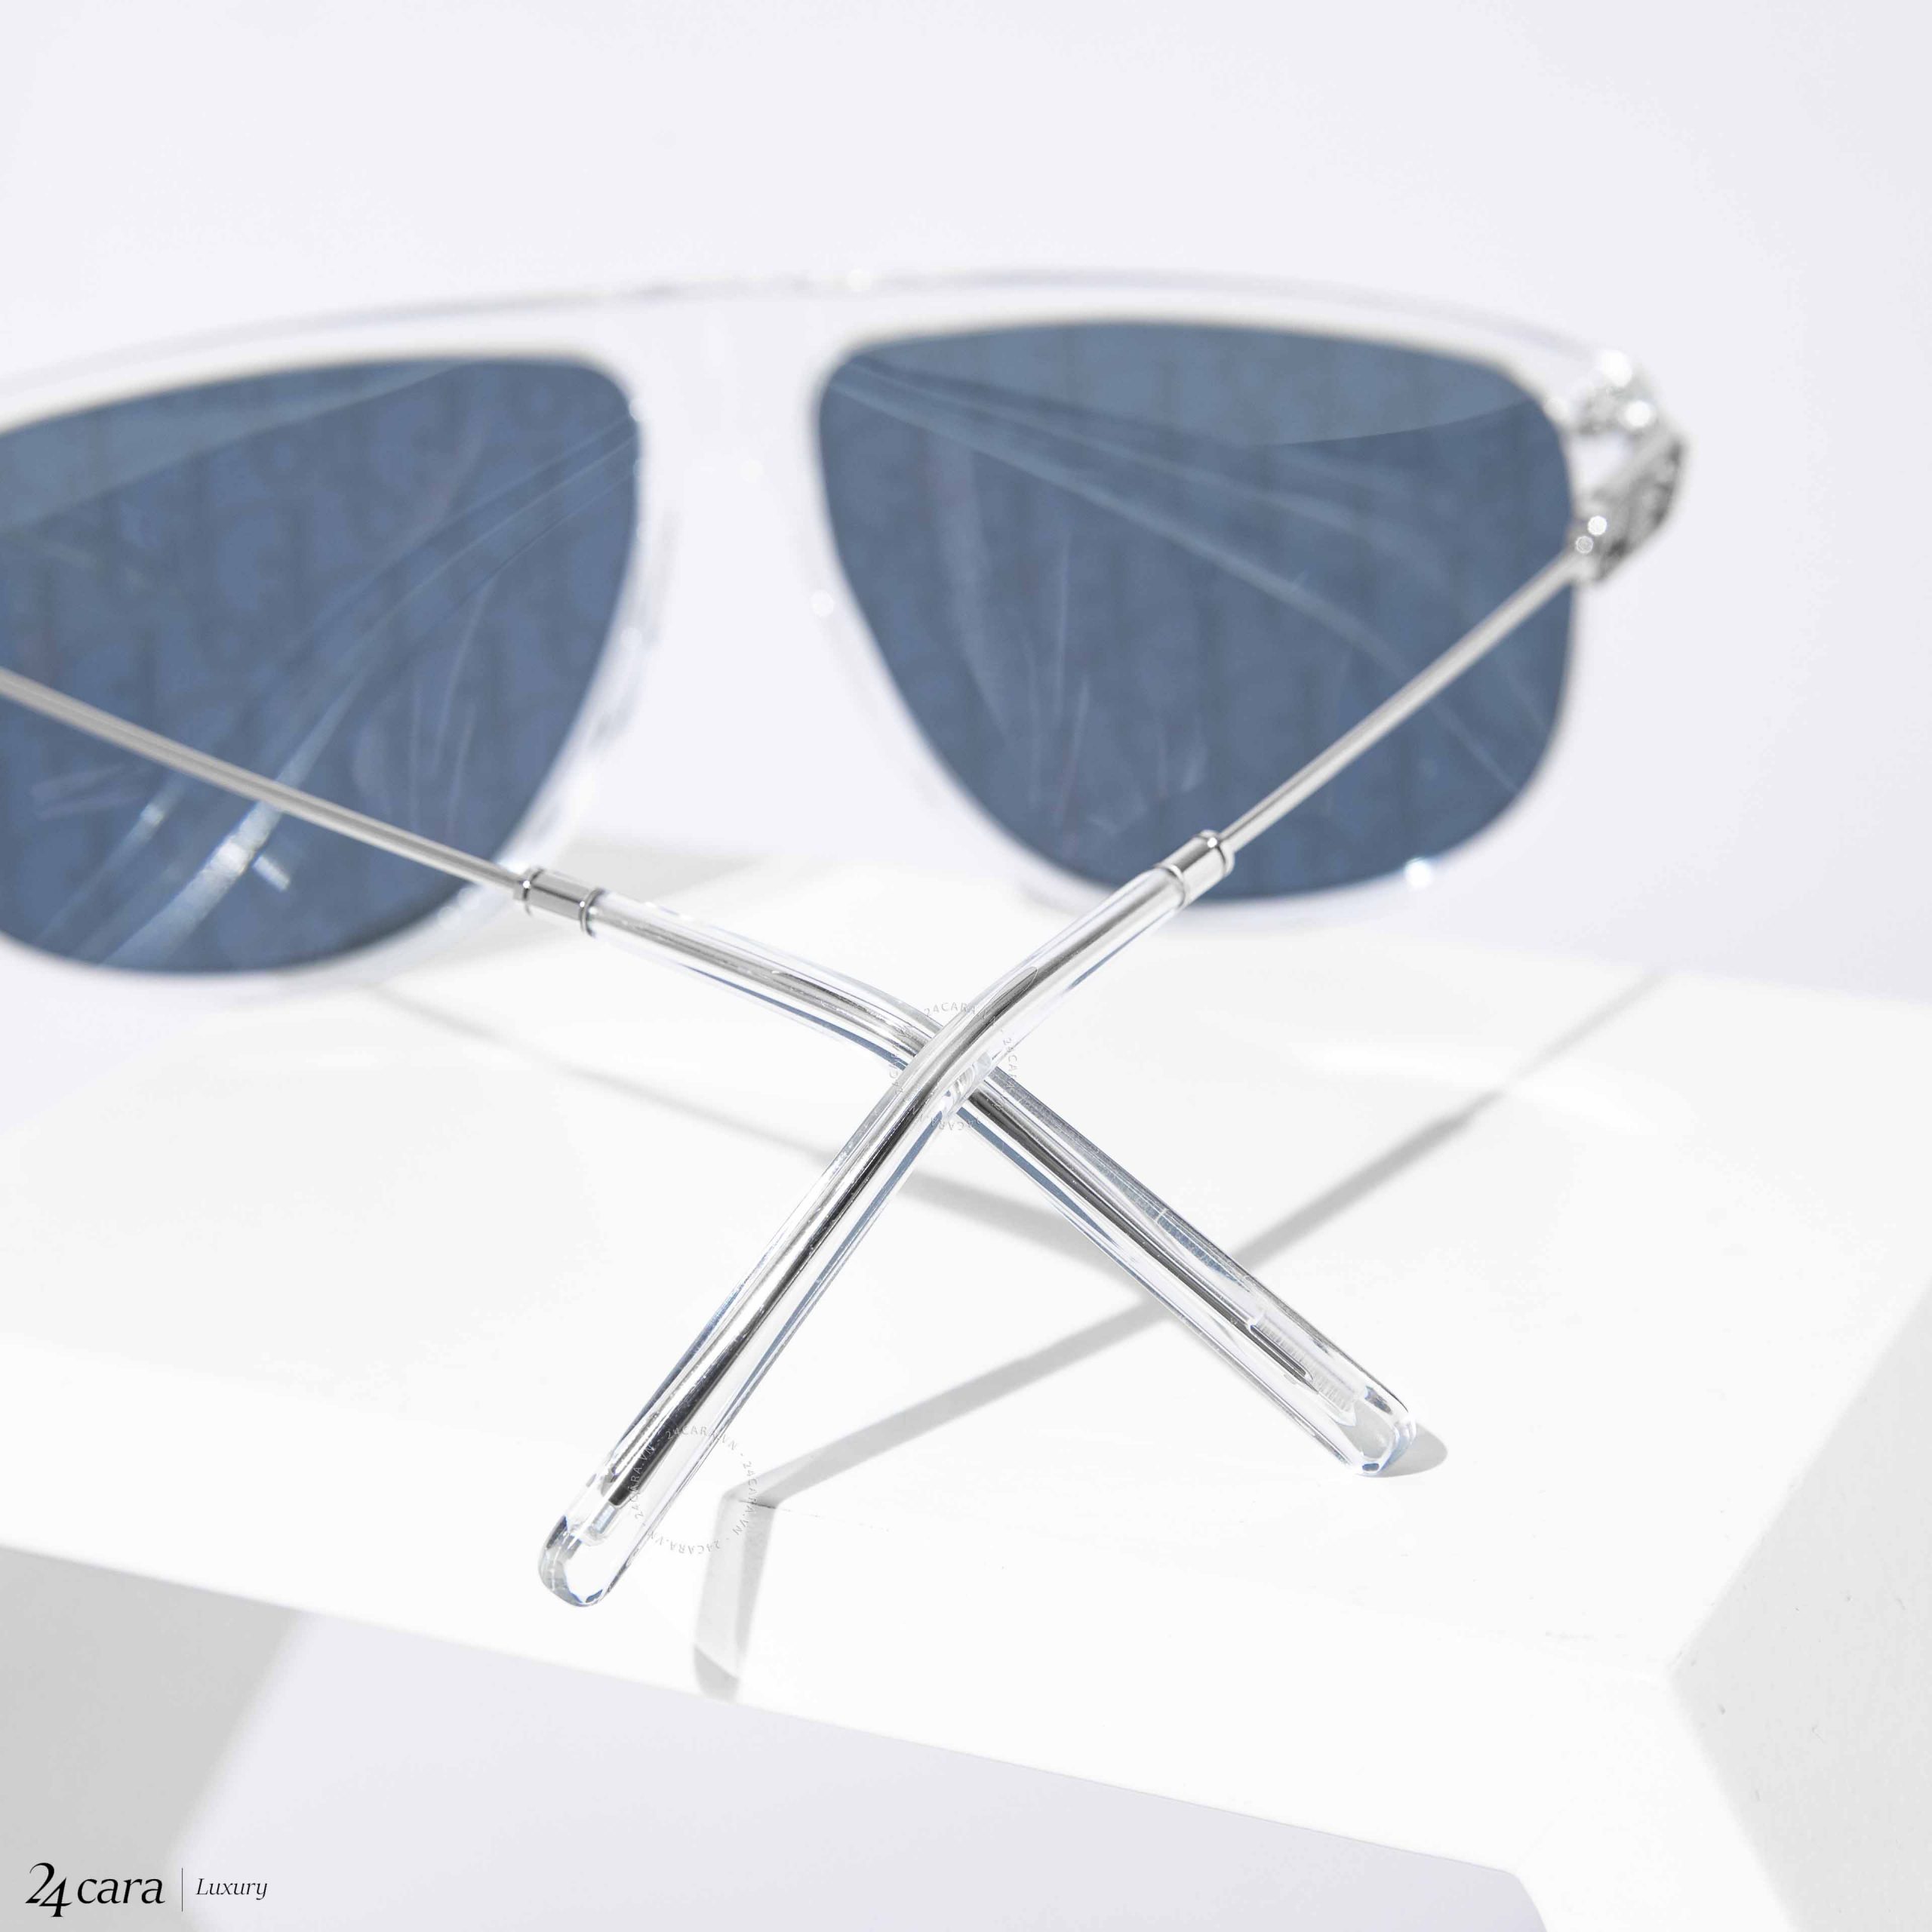 DIOR EYEWEAR Wildior S2U rectangularframe acetate sunglasses  NETAPORTER